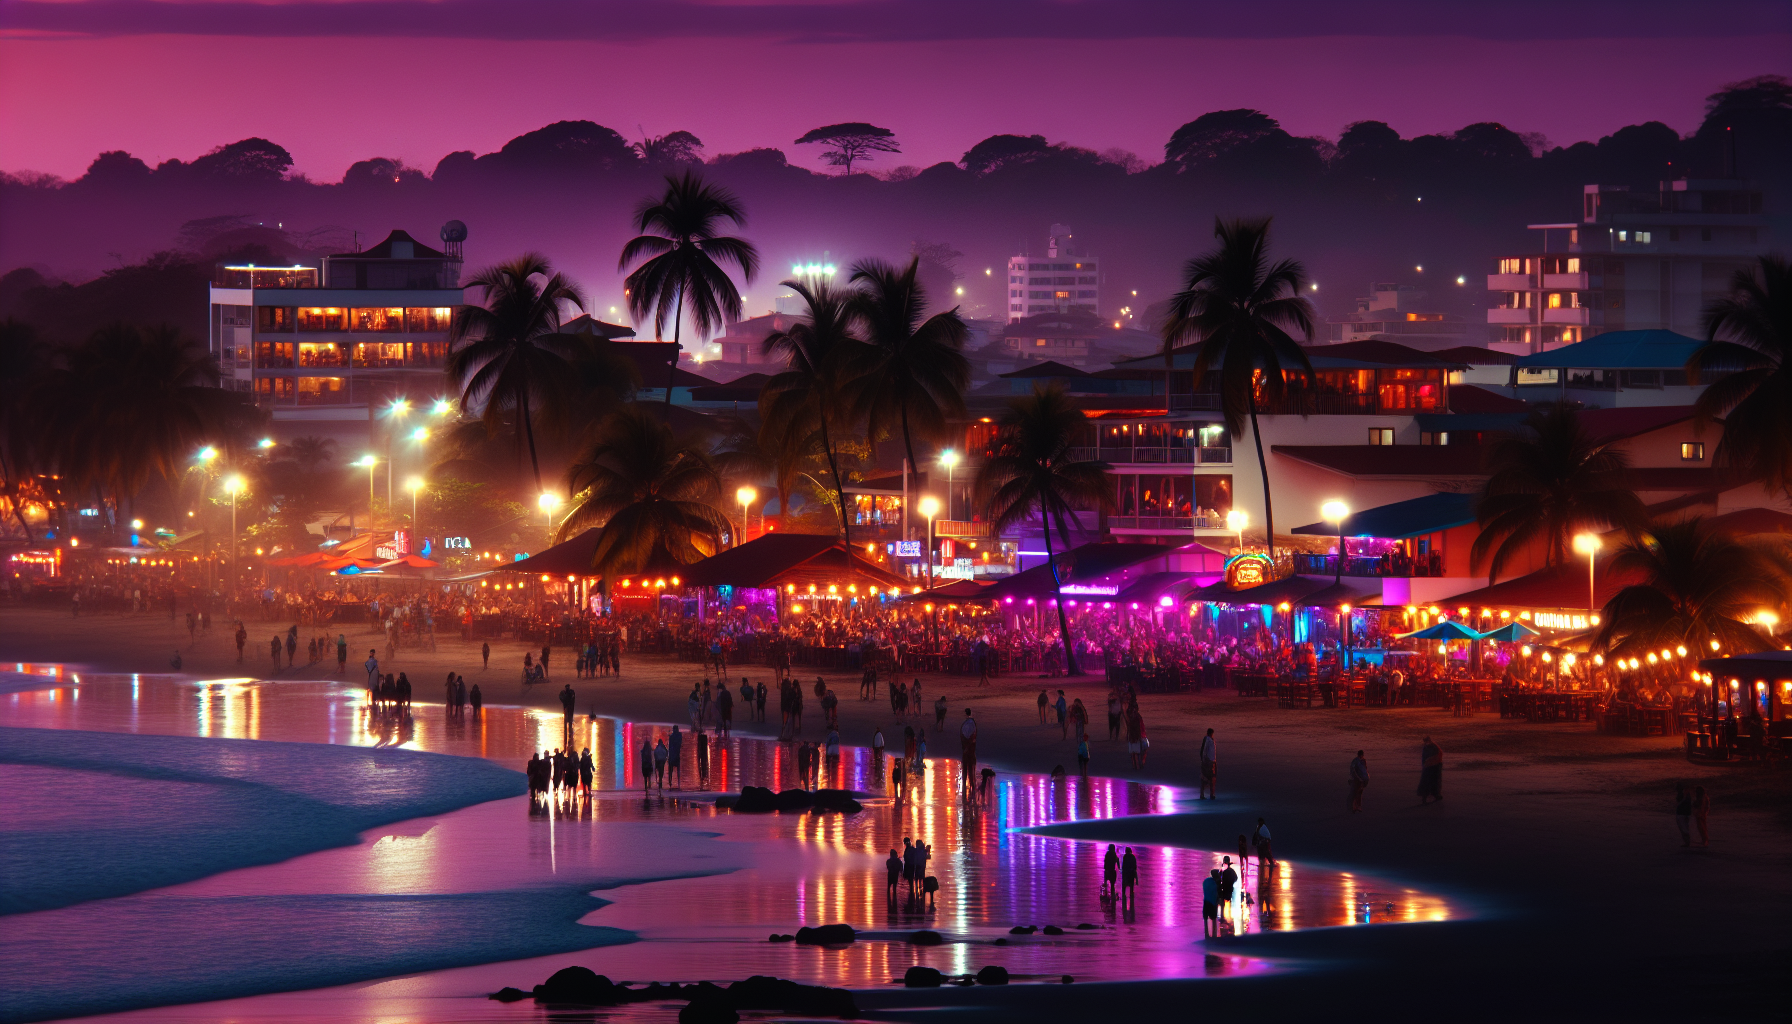 Vibrant nightlife at Jaco Beach, Costa Rica